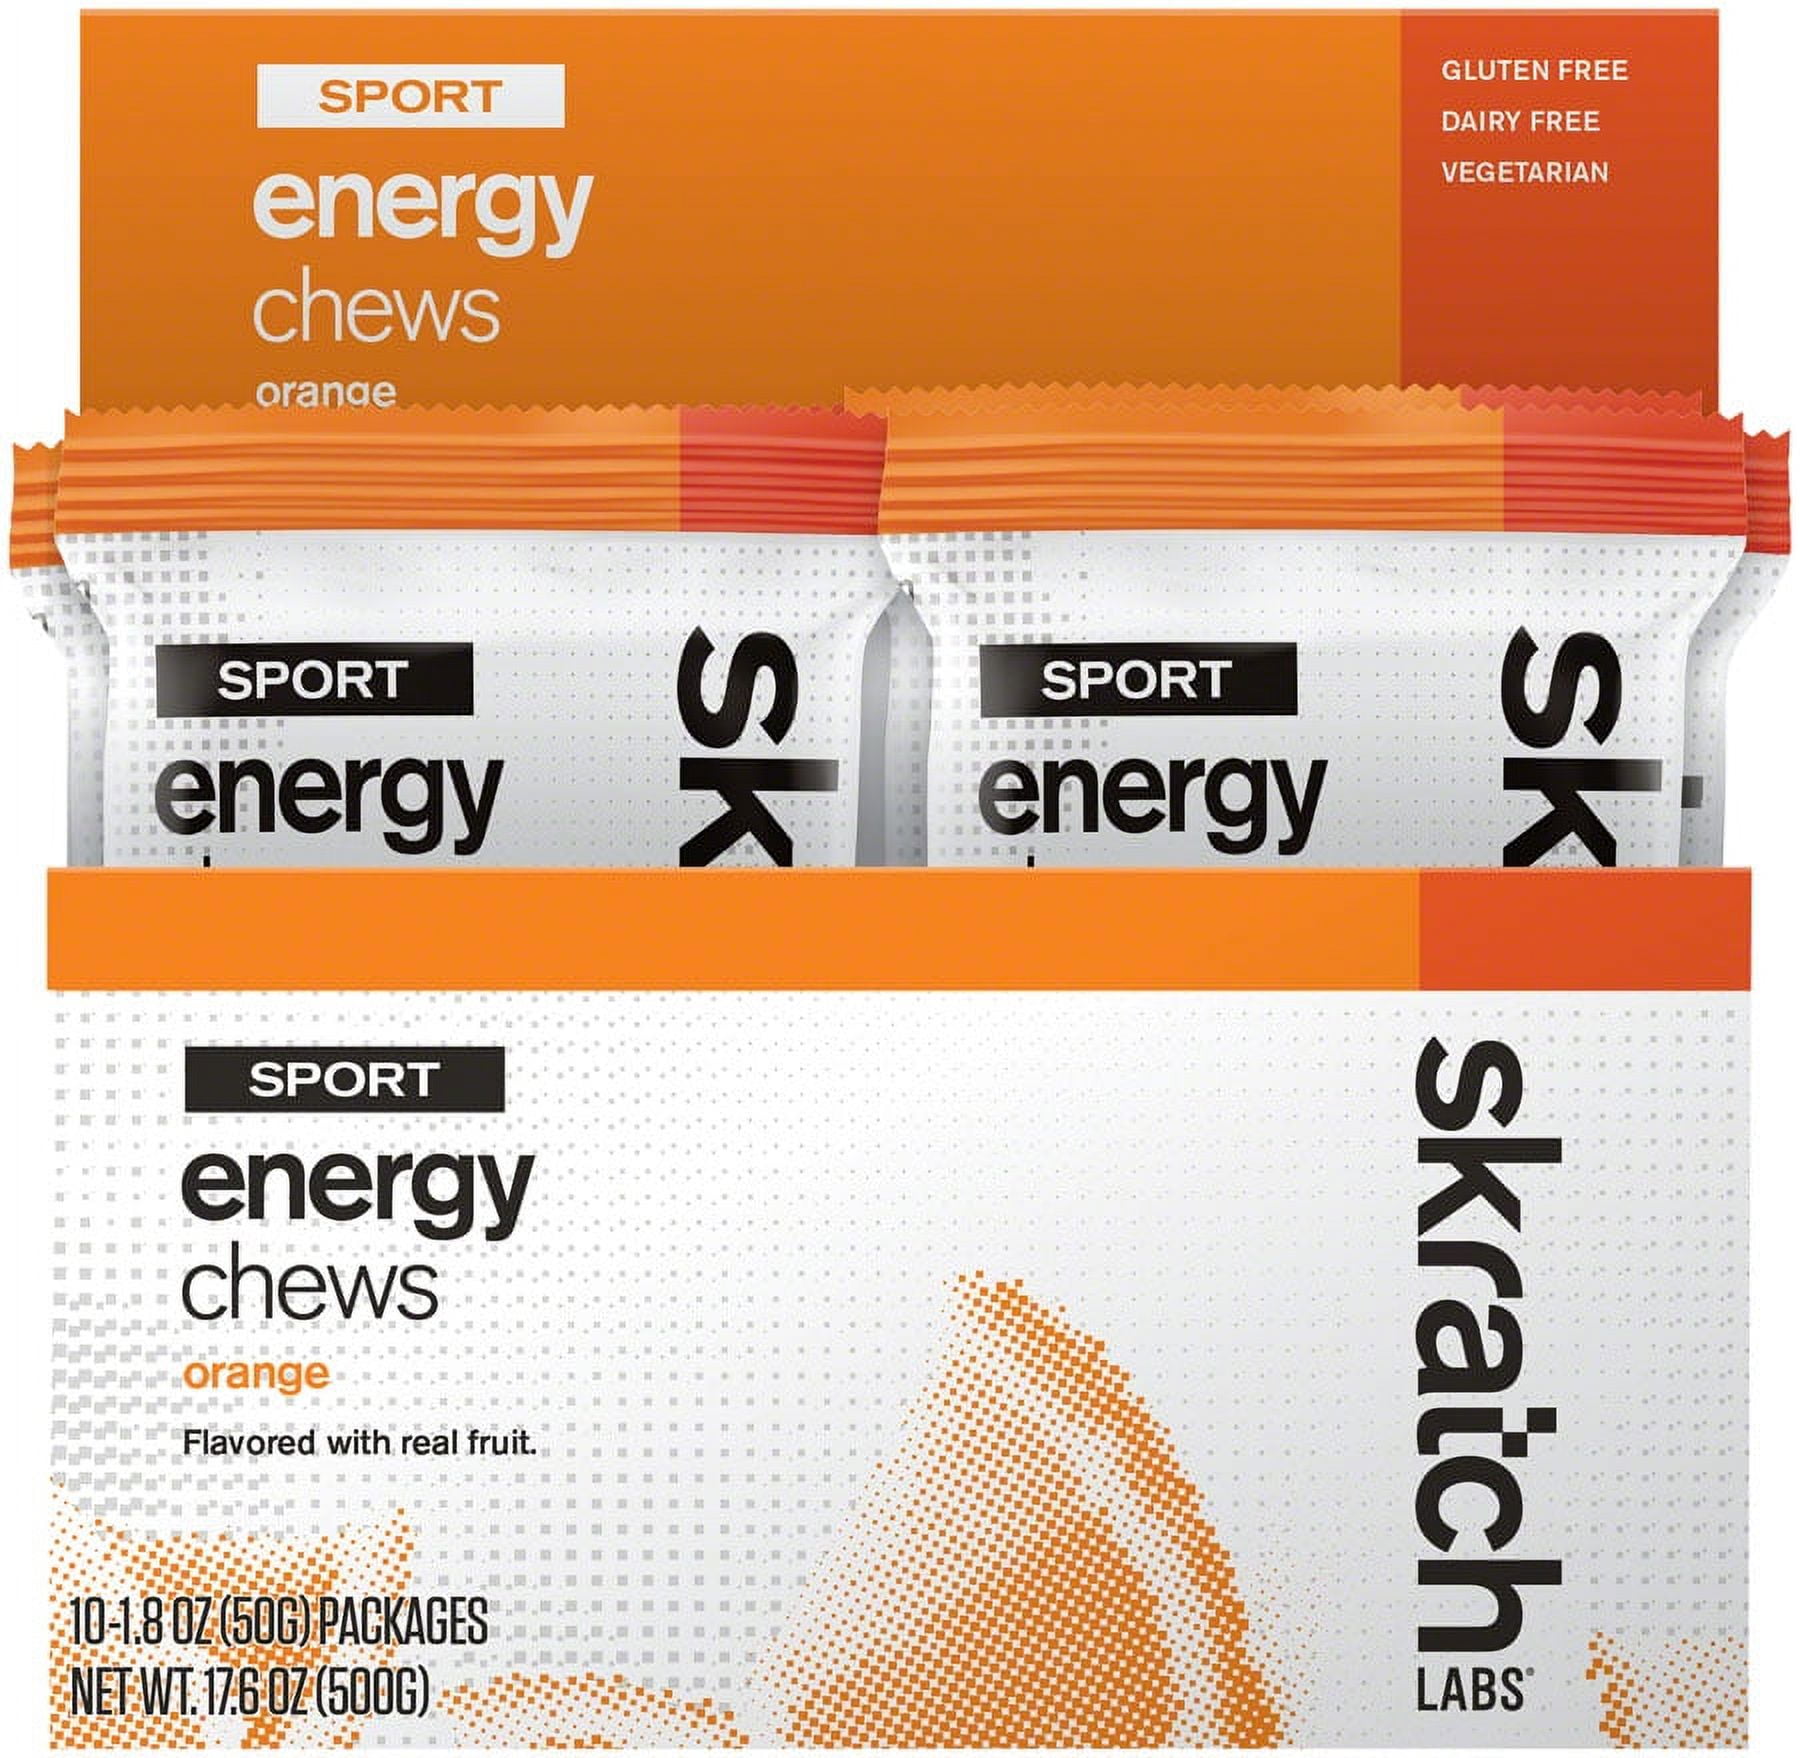 Skratch Energy Chew Case - RnJ Sports